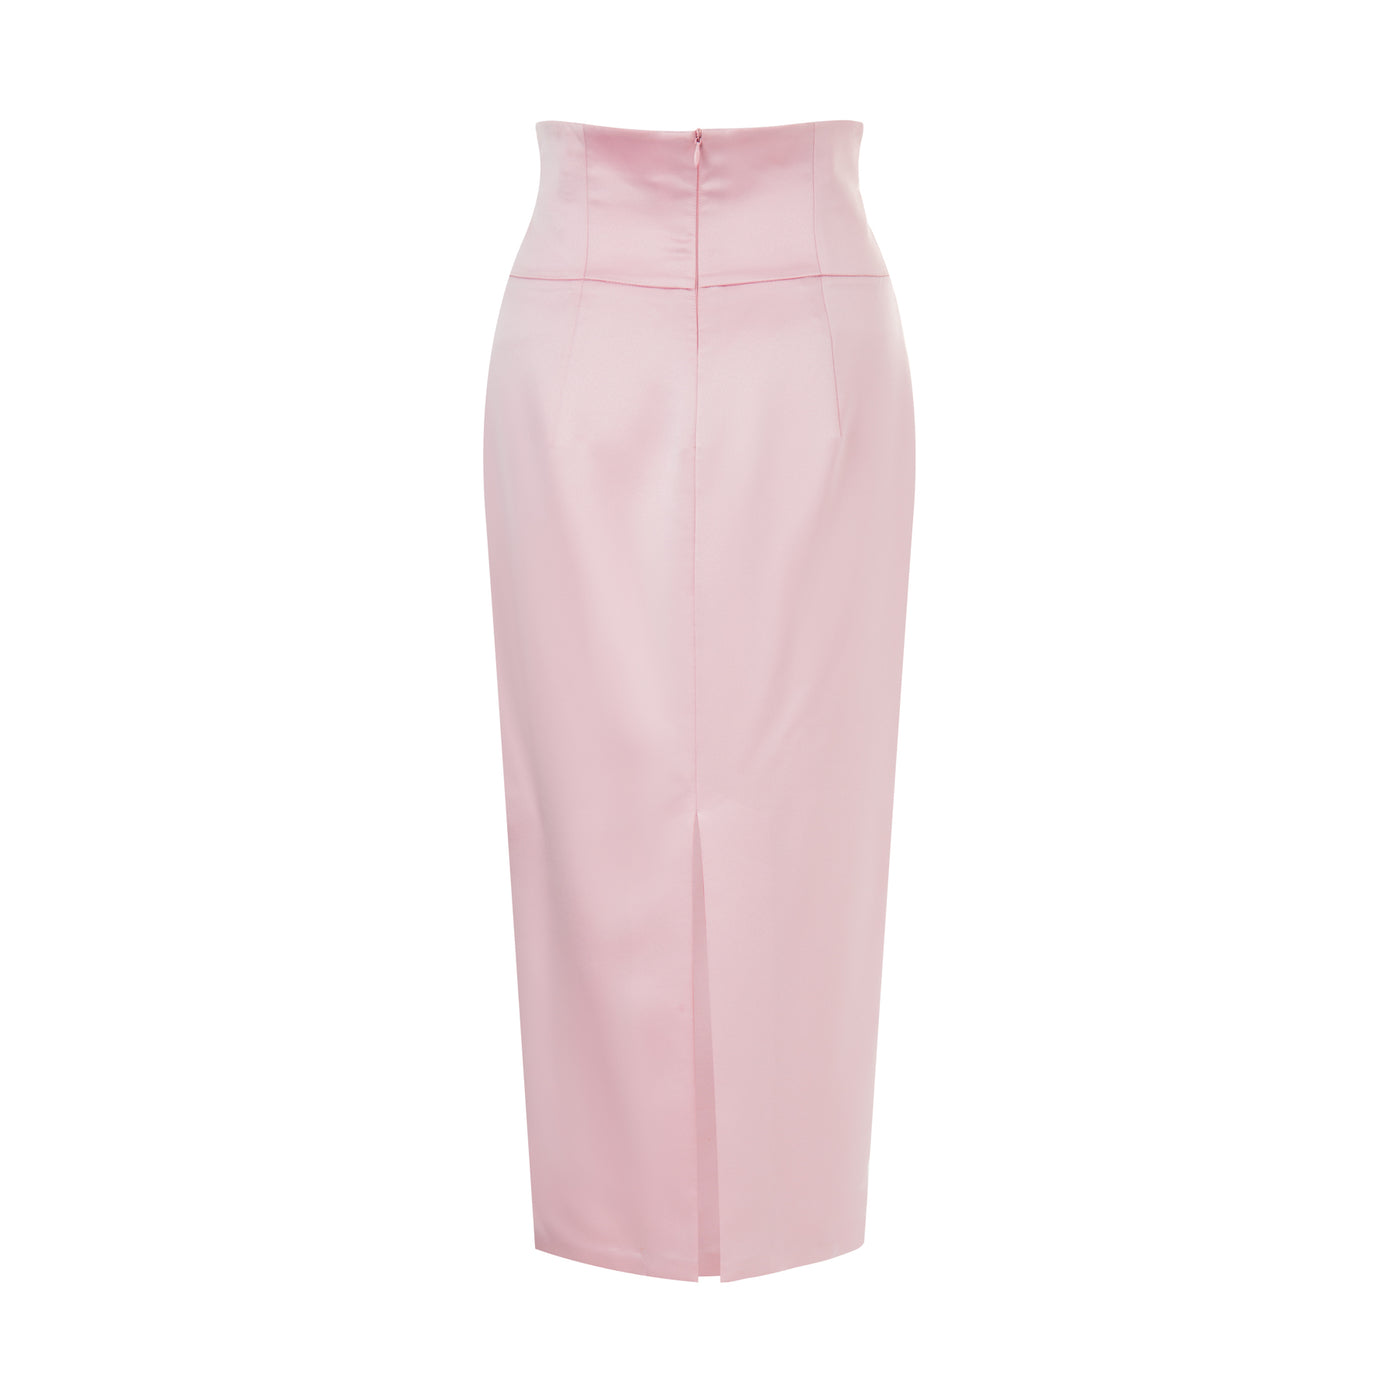 Pink draped skirt